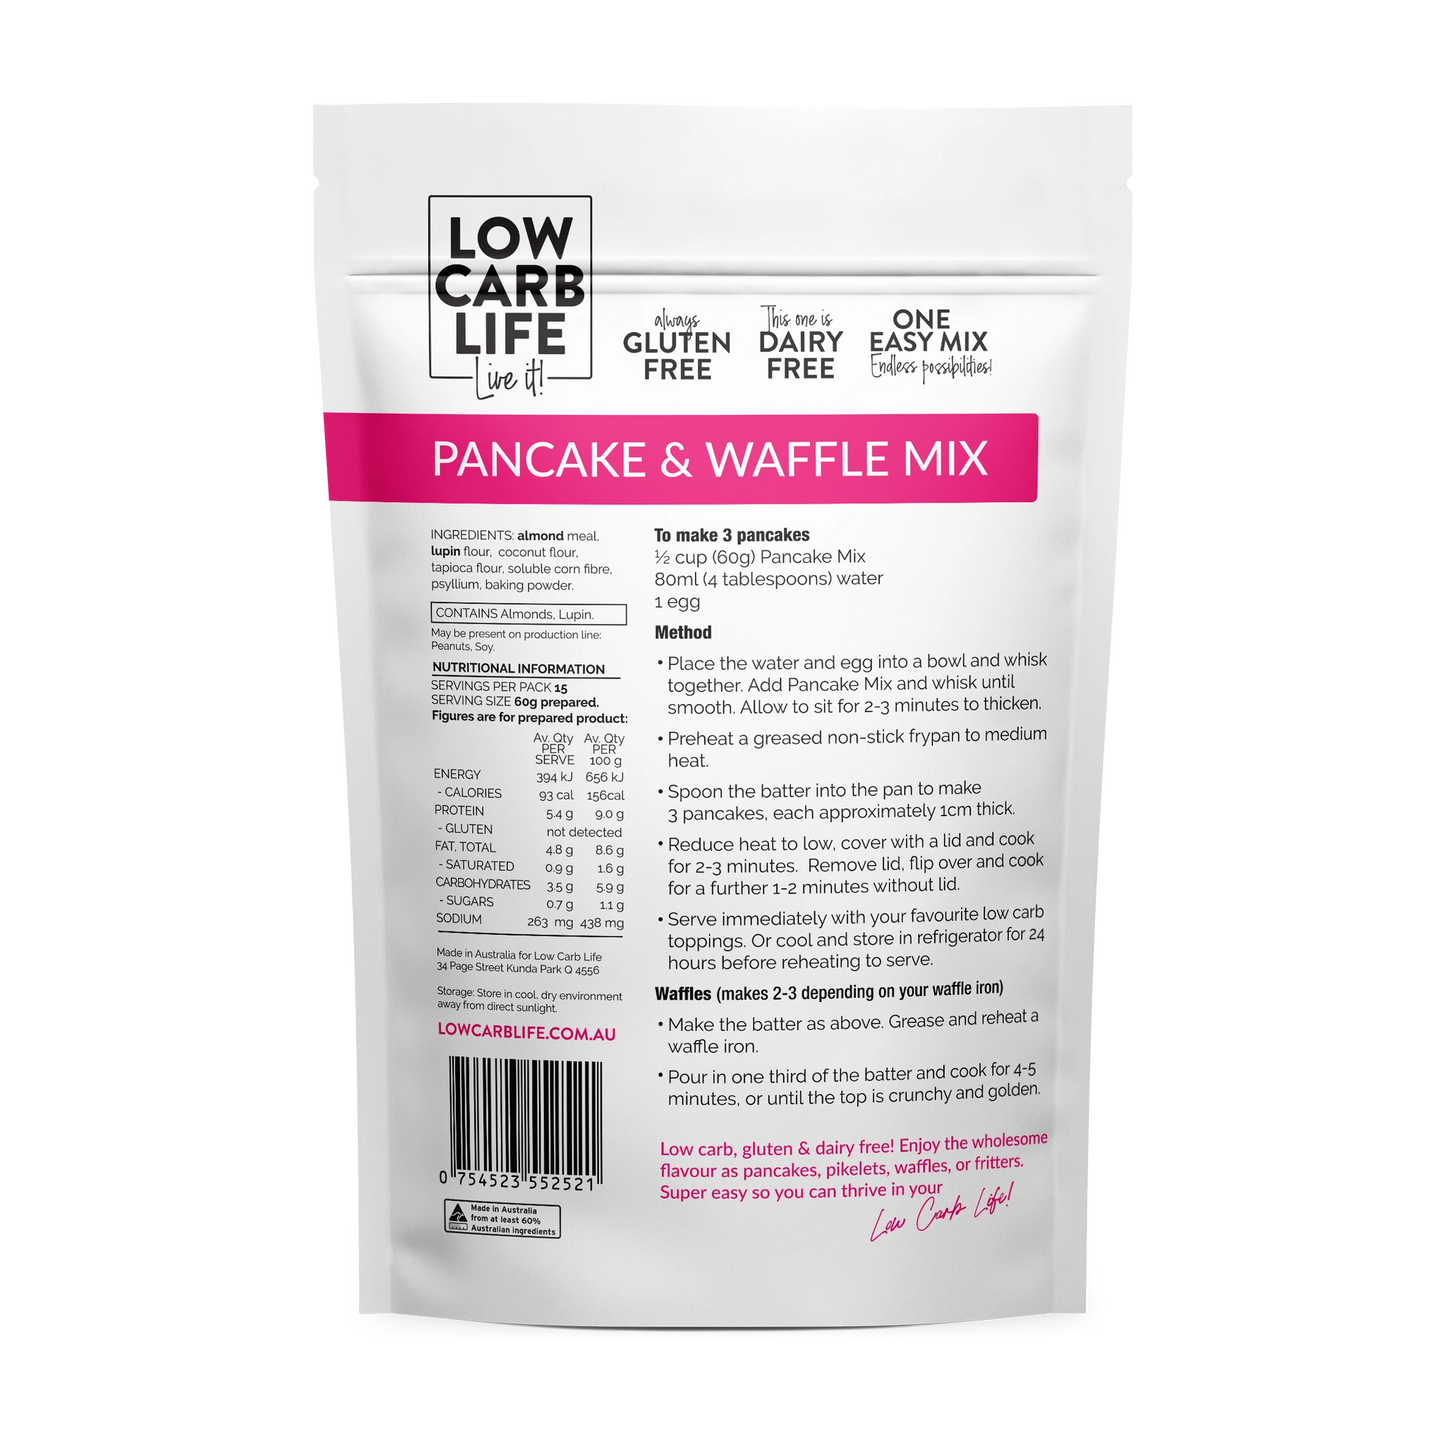 Low Carb Life Keto Bake Mix 300g, Pancake And Waffle Mix